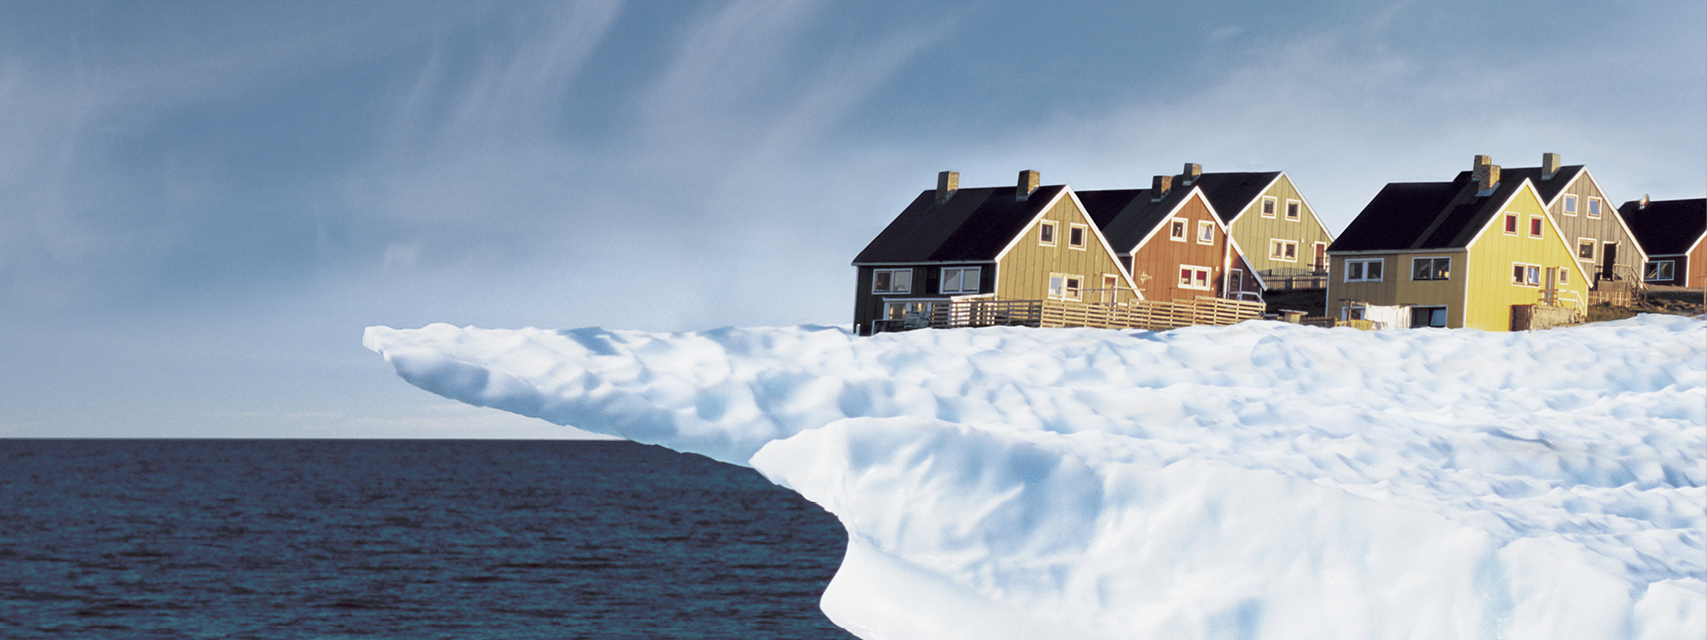 RIHA Banner - Image of houses on an iceburg